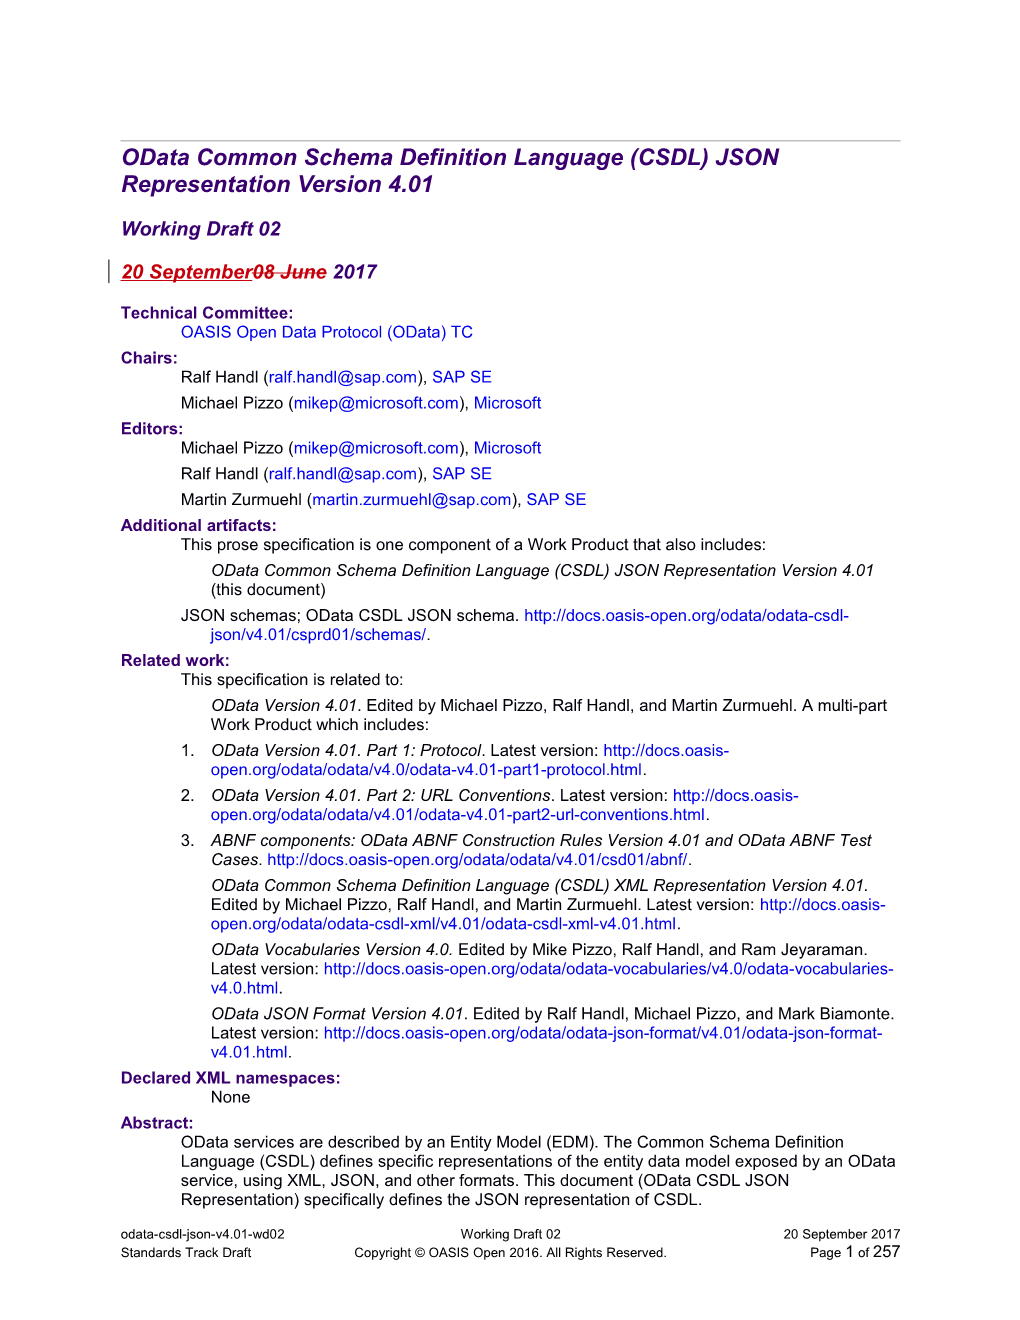 Odata Common Schema Definition Language (CSDL) JSON Representation Version 4.01